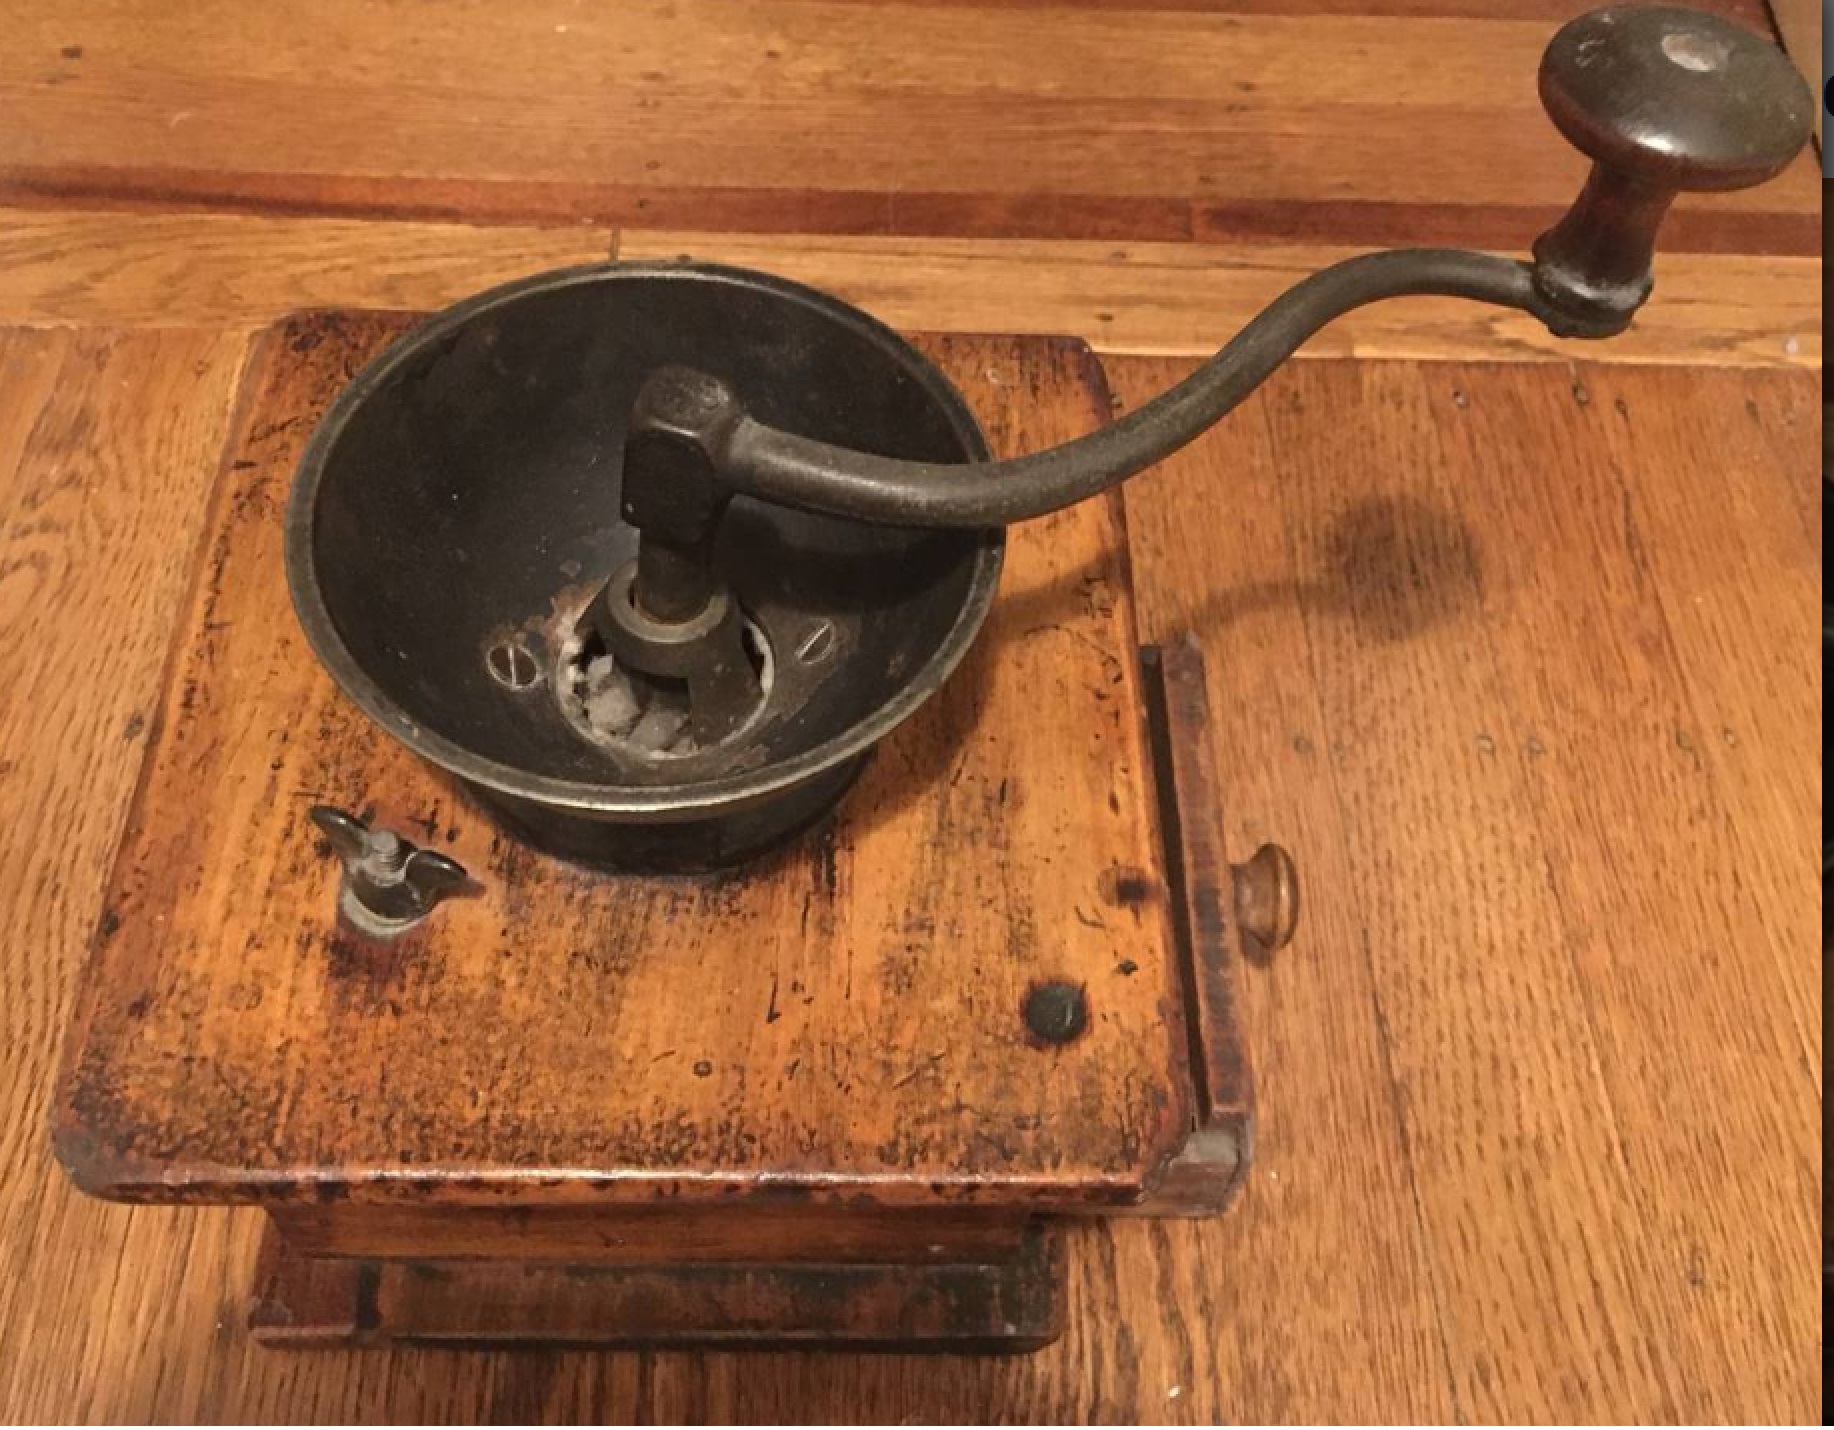 Antique Manual Coffee Grinder